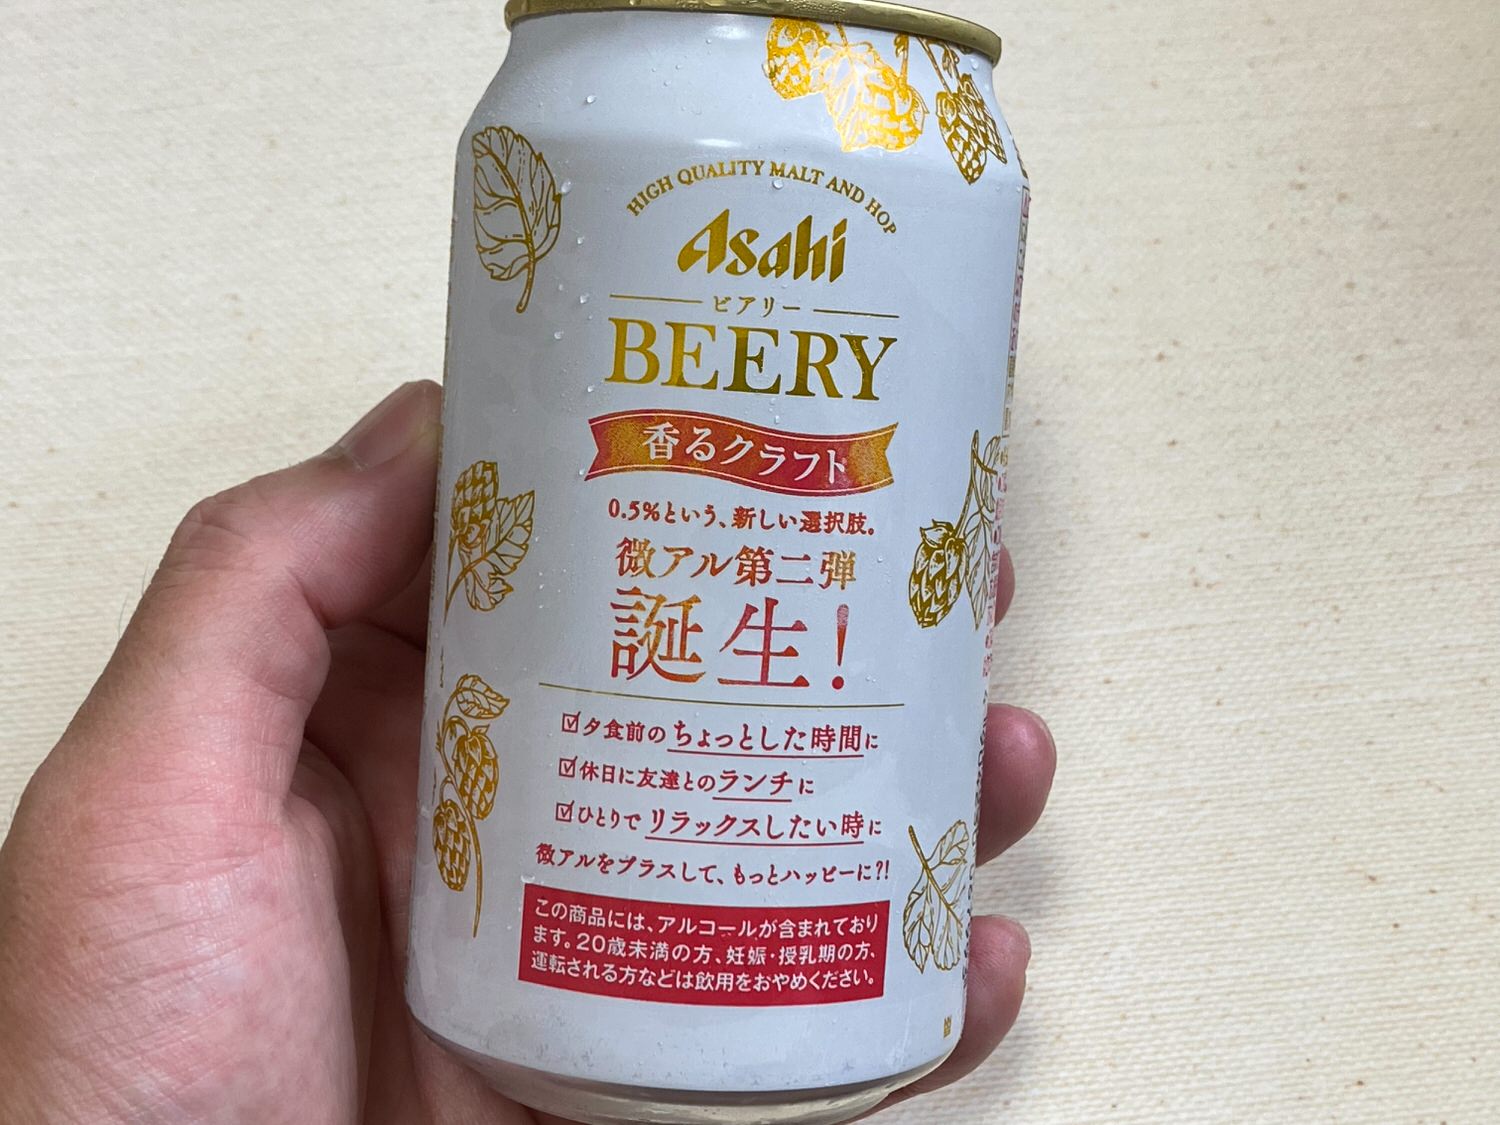 Asahi beery 2 06 04